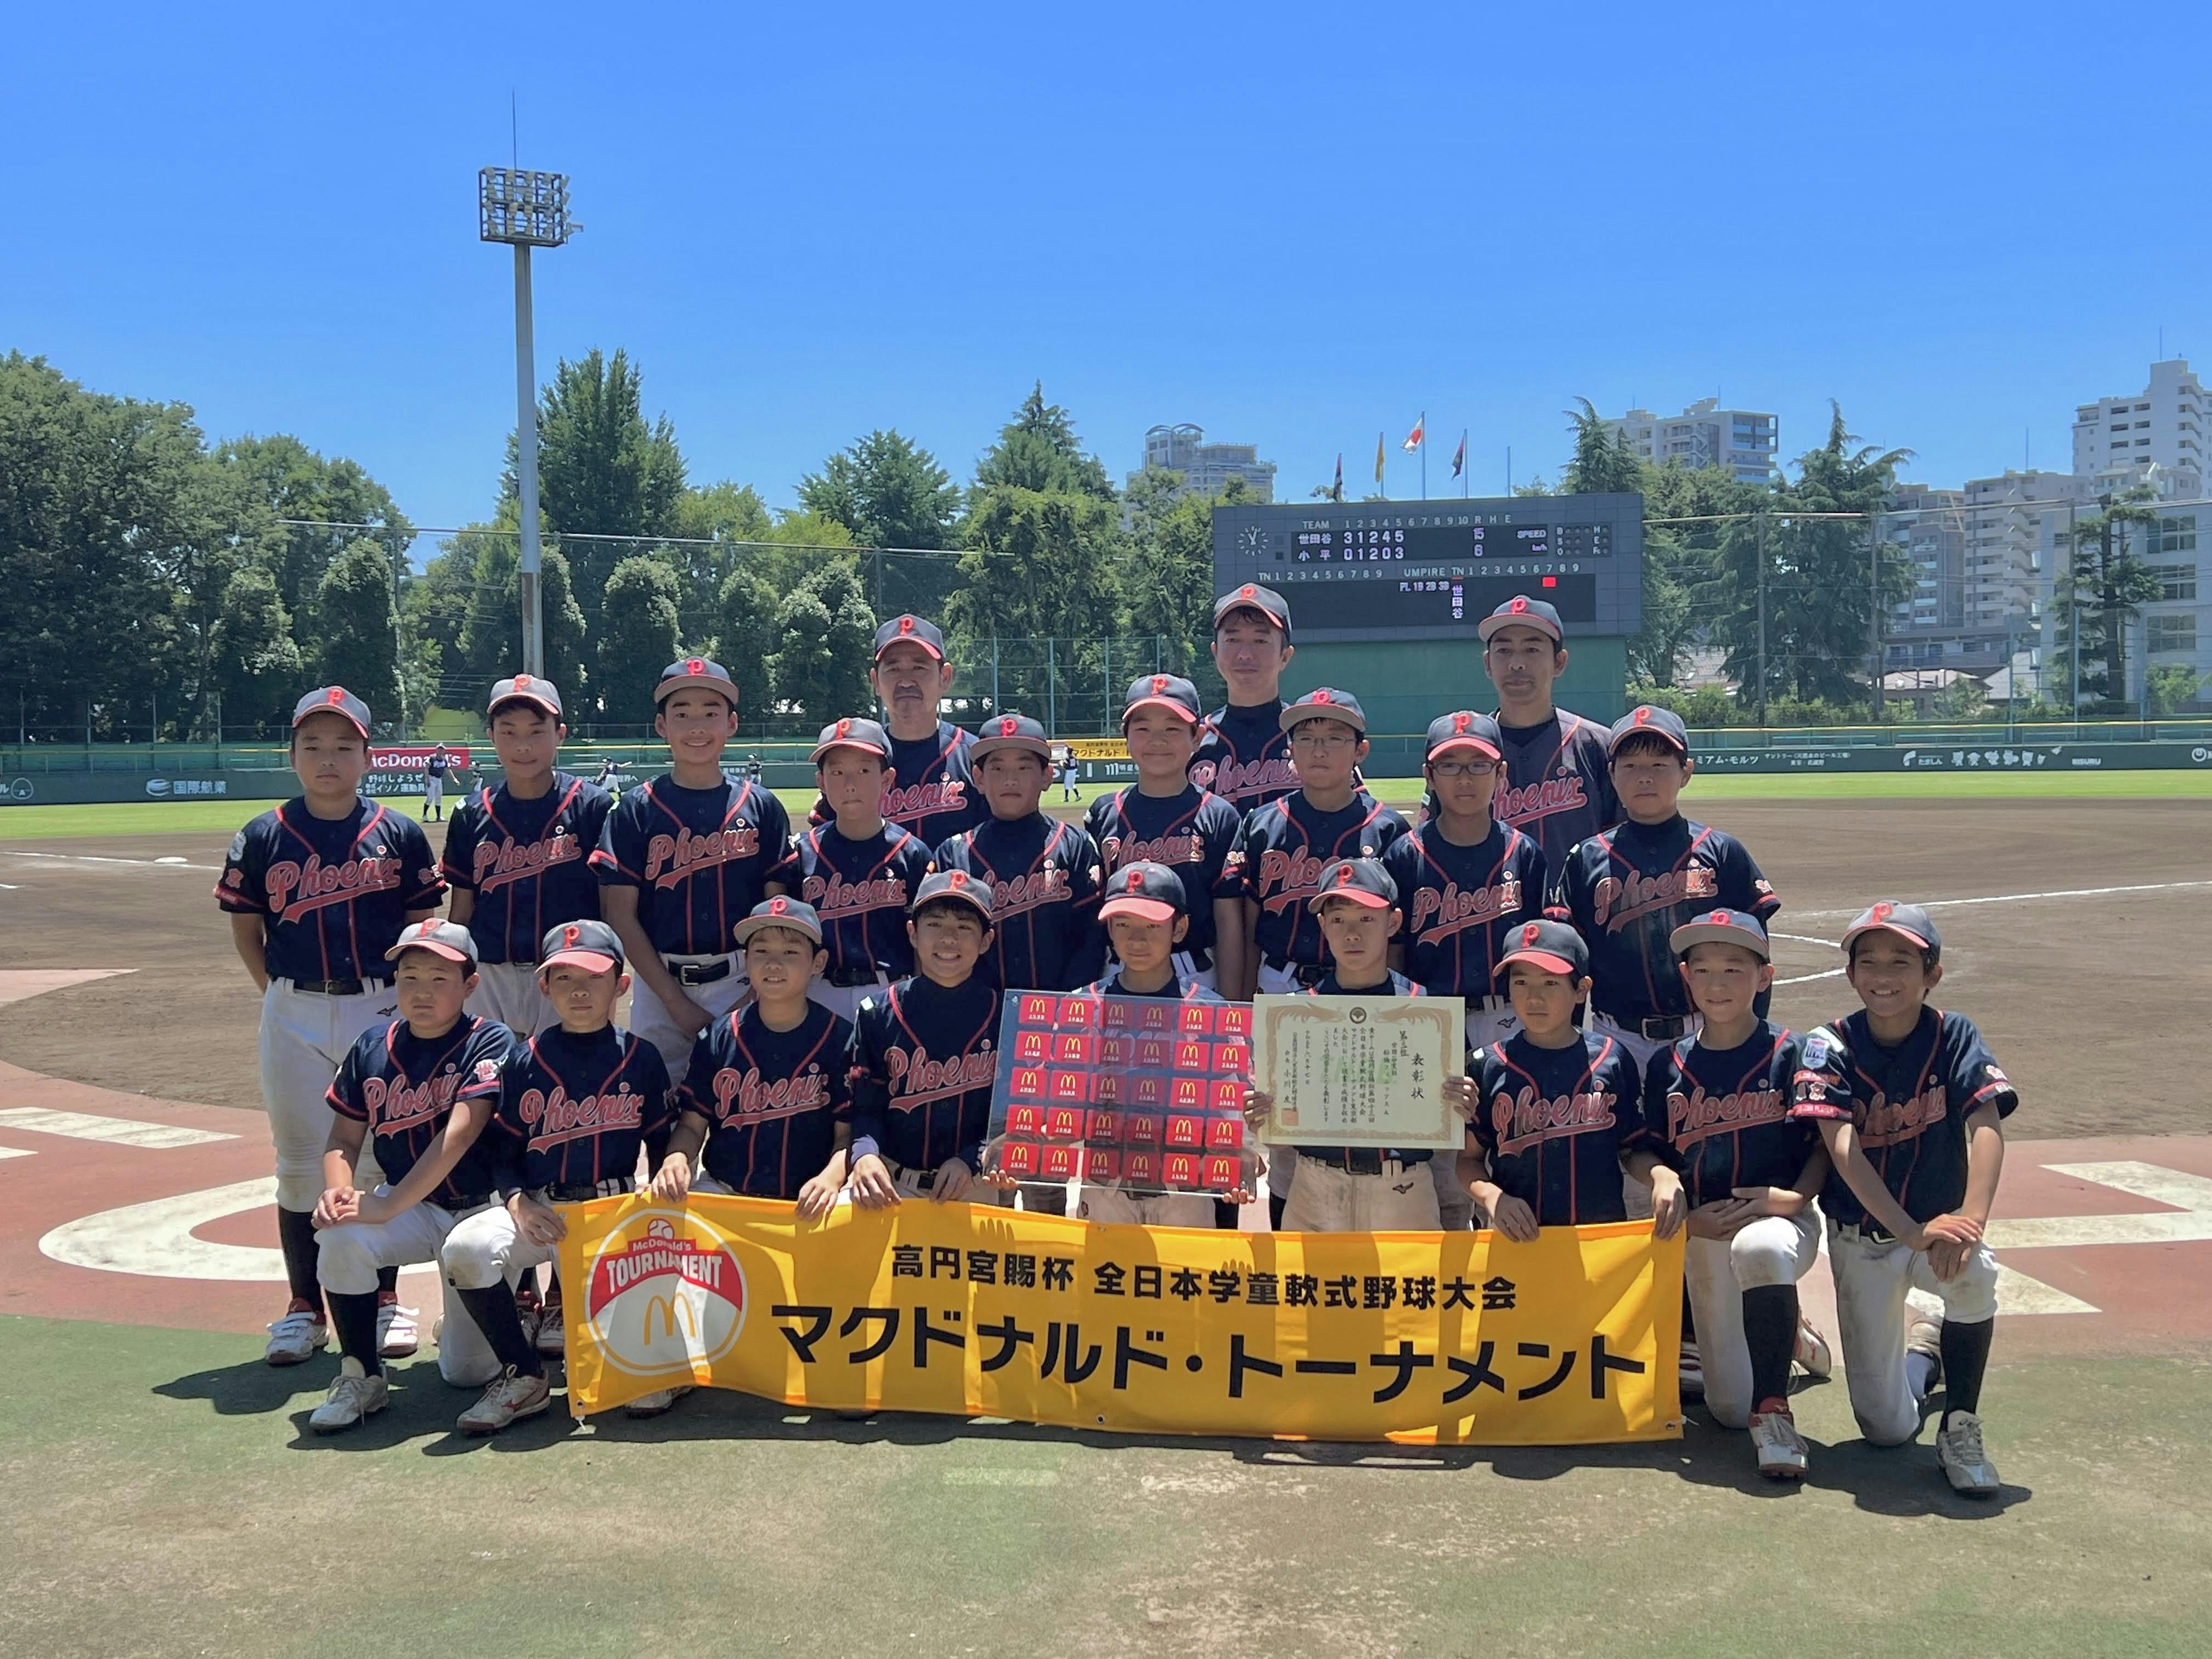 CAMPFIRE　少年の夏。日本一を目指す夢。世田谷学童野球チーム初の全国への挑戦。　(キャンプファイヤー)